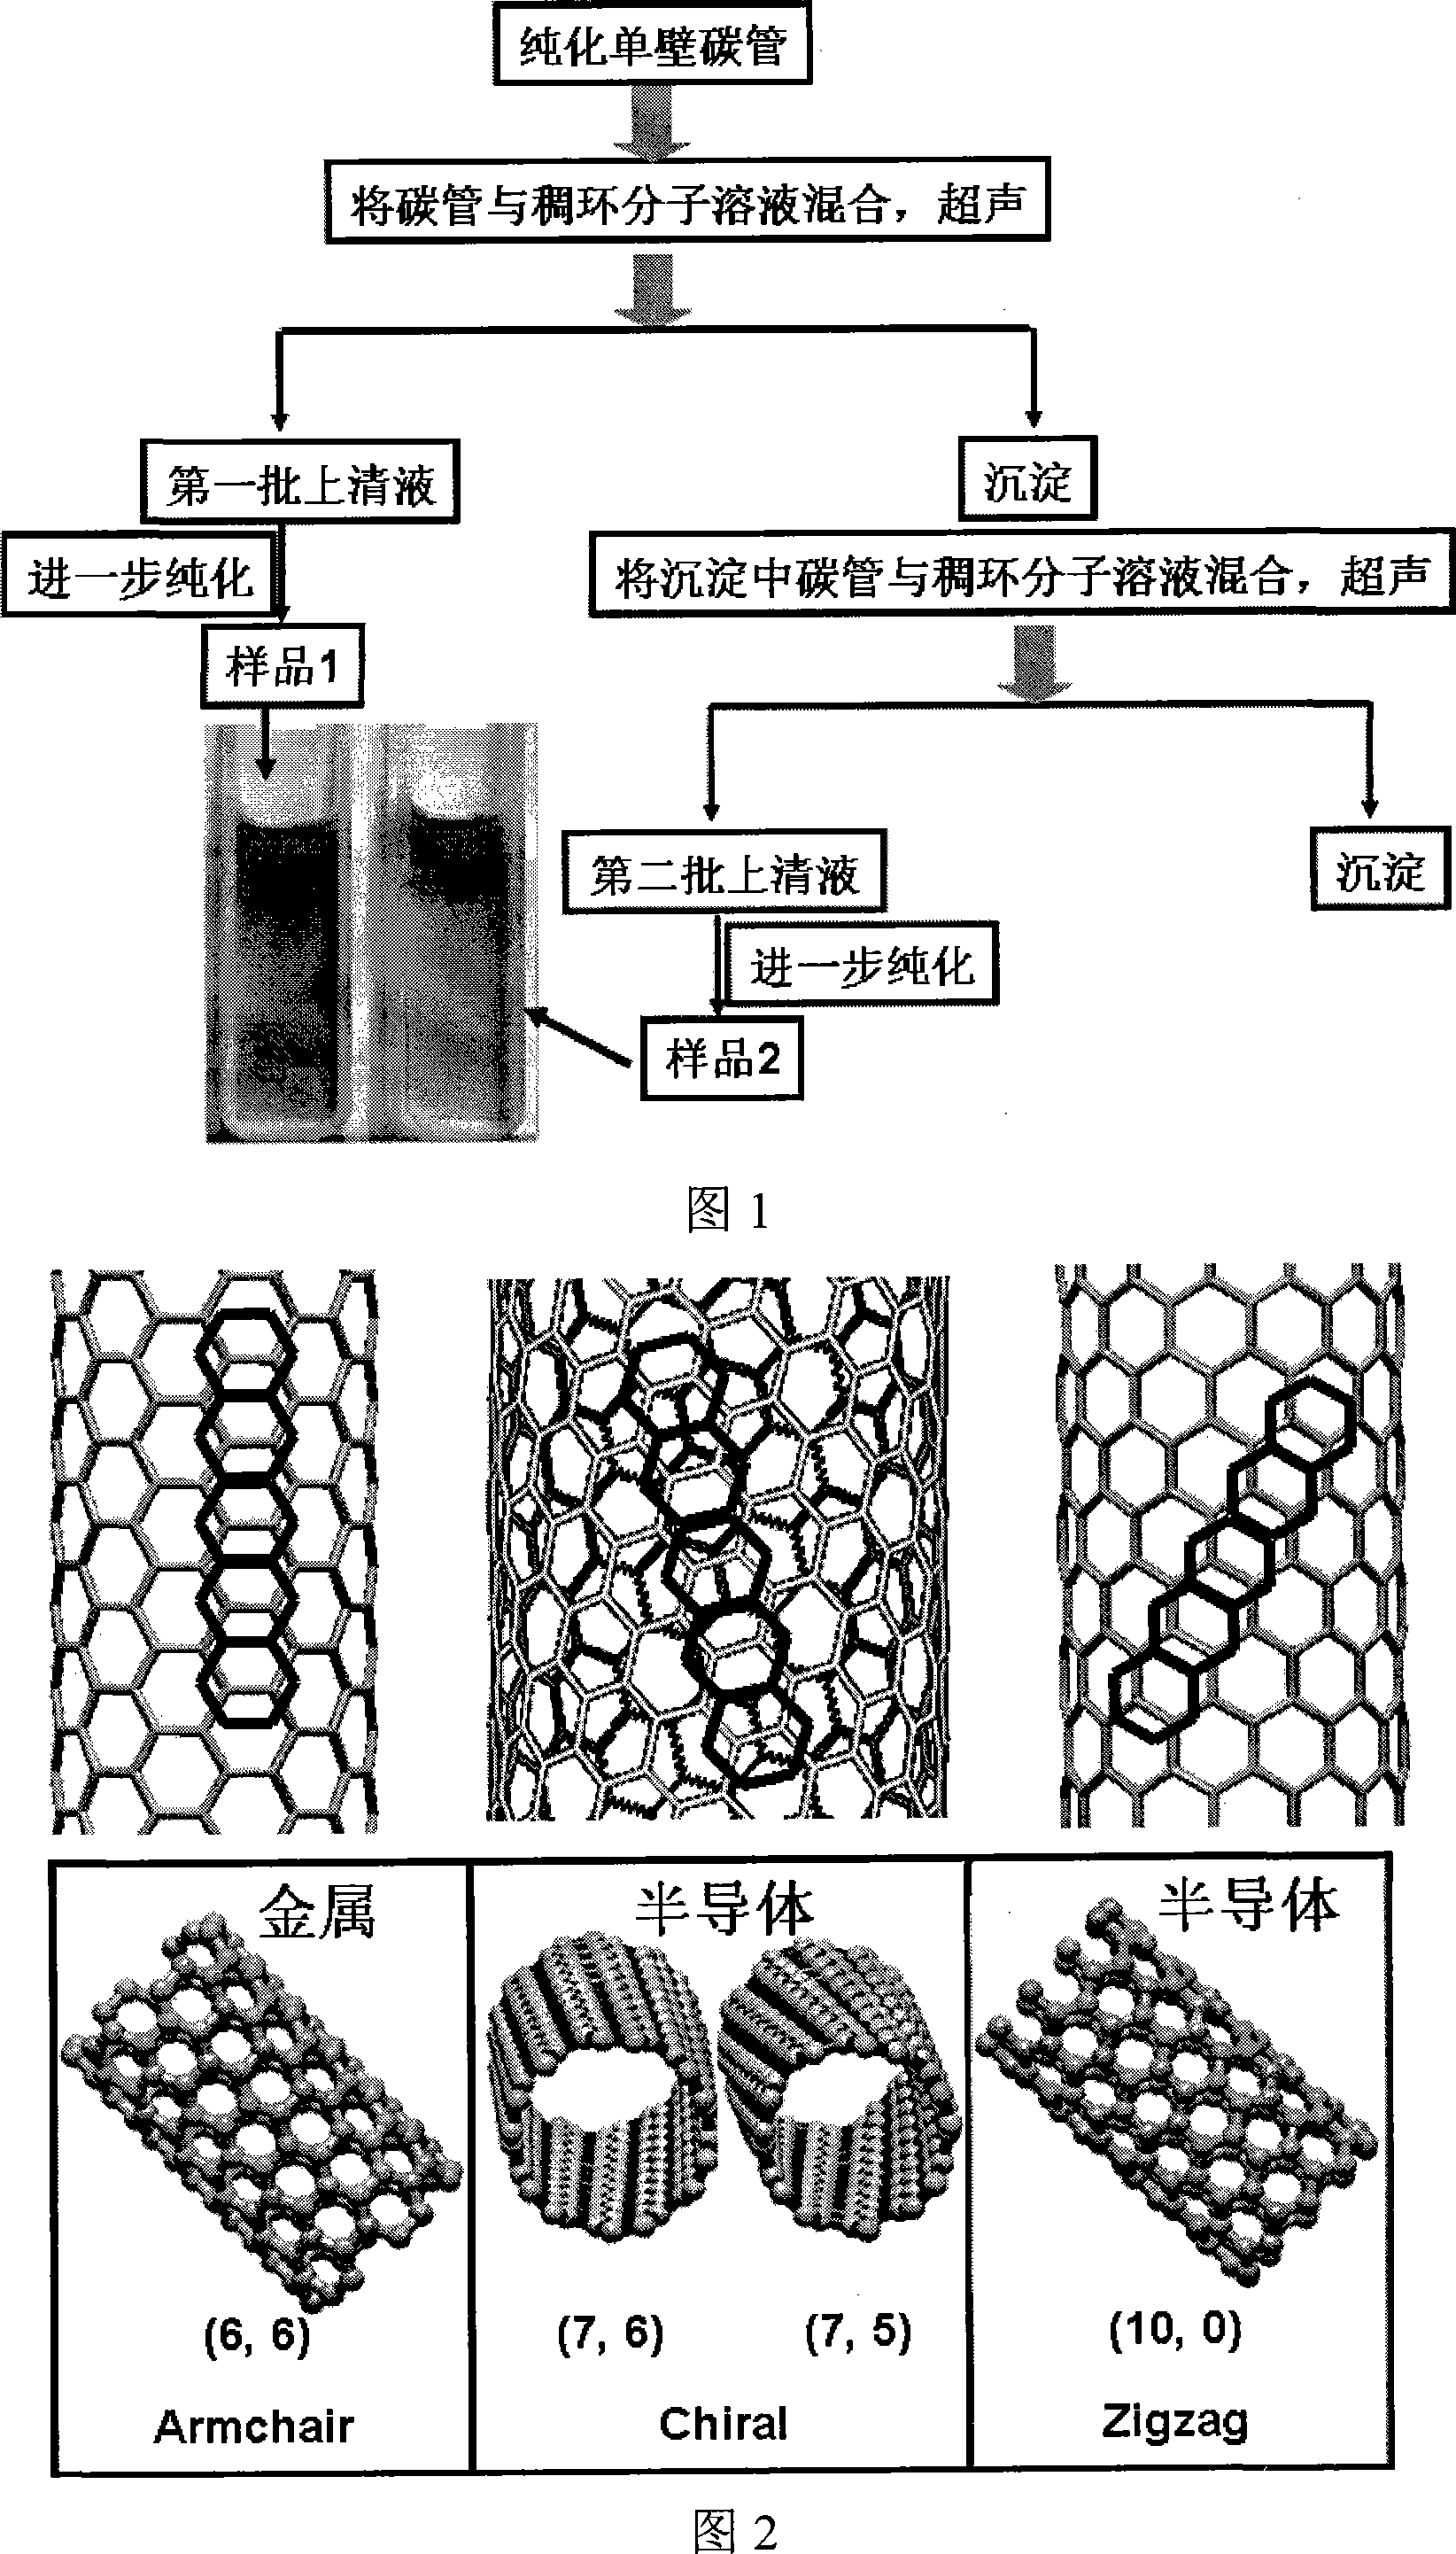 Method for separating metallicity and semiconductivity nano-tube from single wall carbon nano-tube